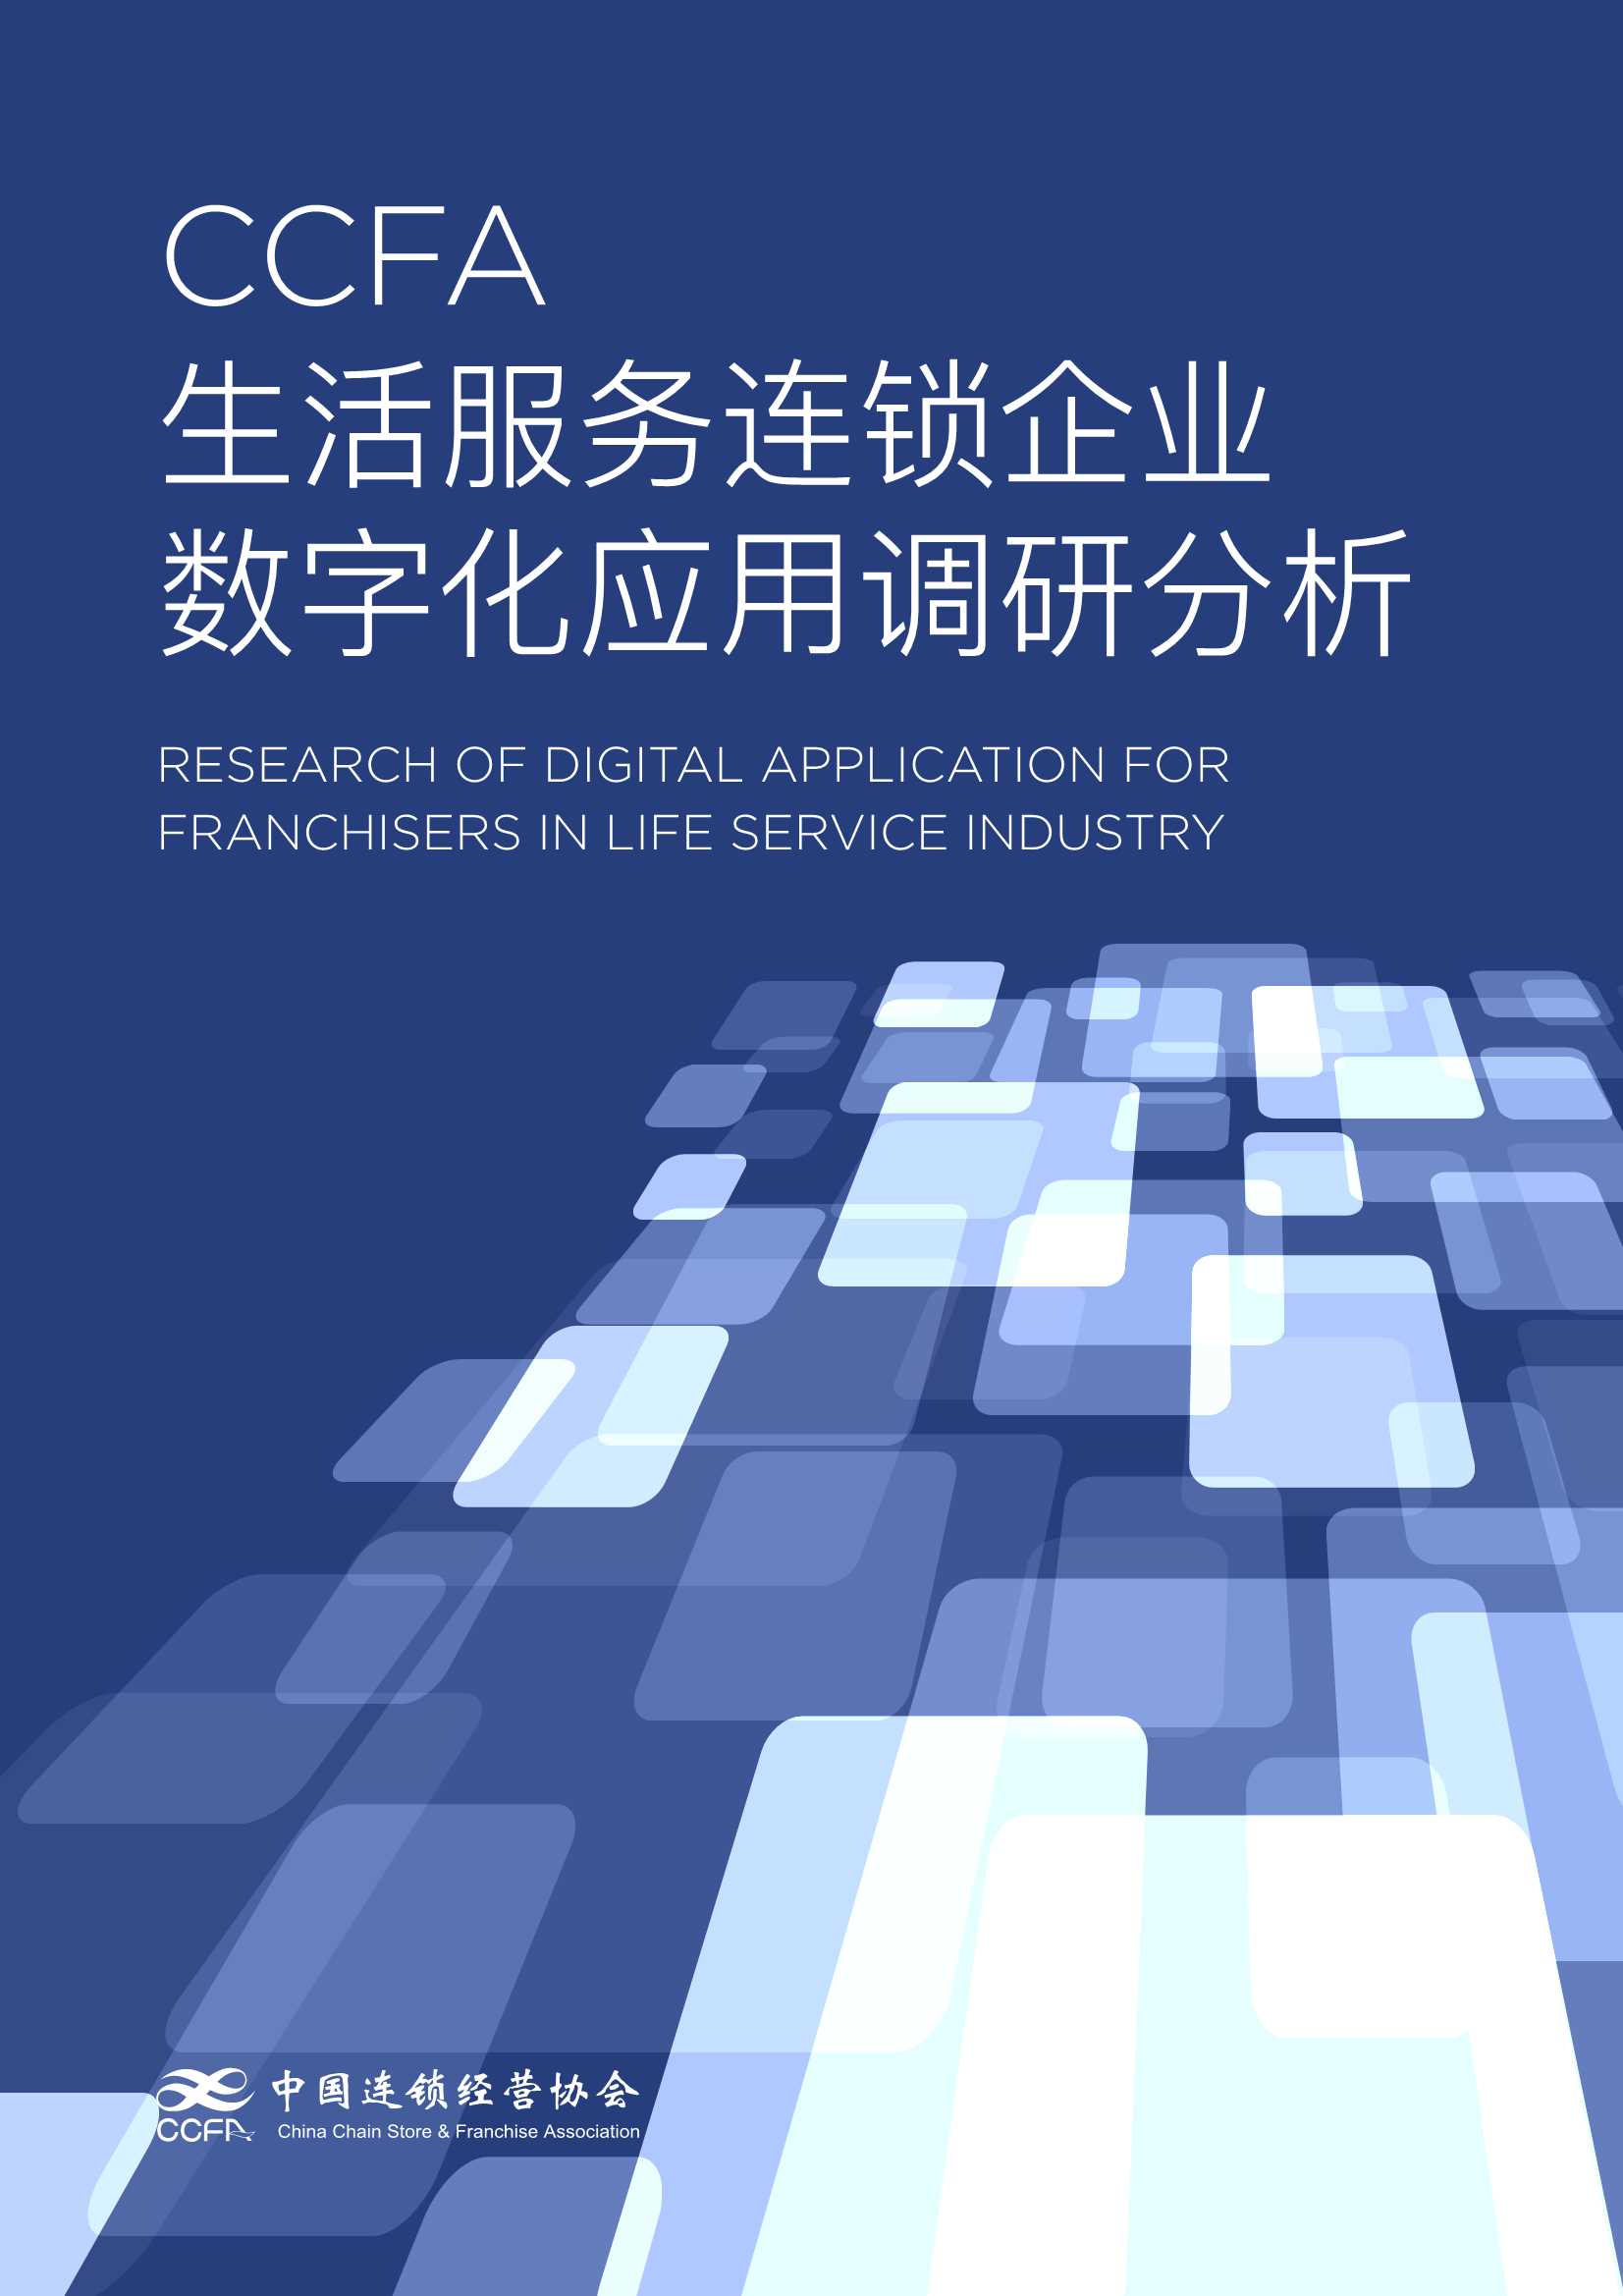 CCFA-生活服务连锁企业数字化应用情况分析-2021.10-14页